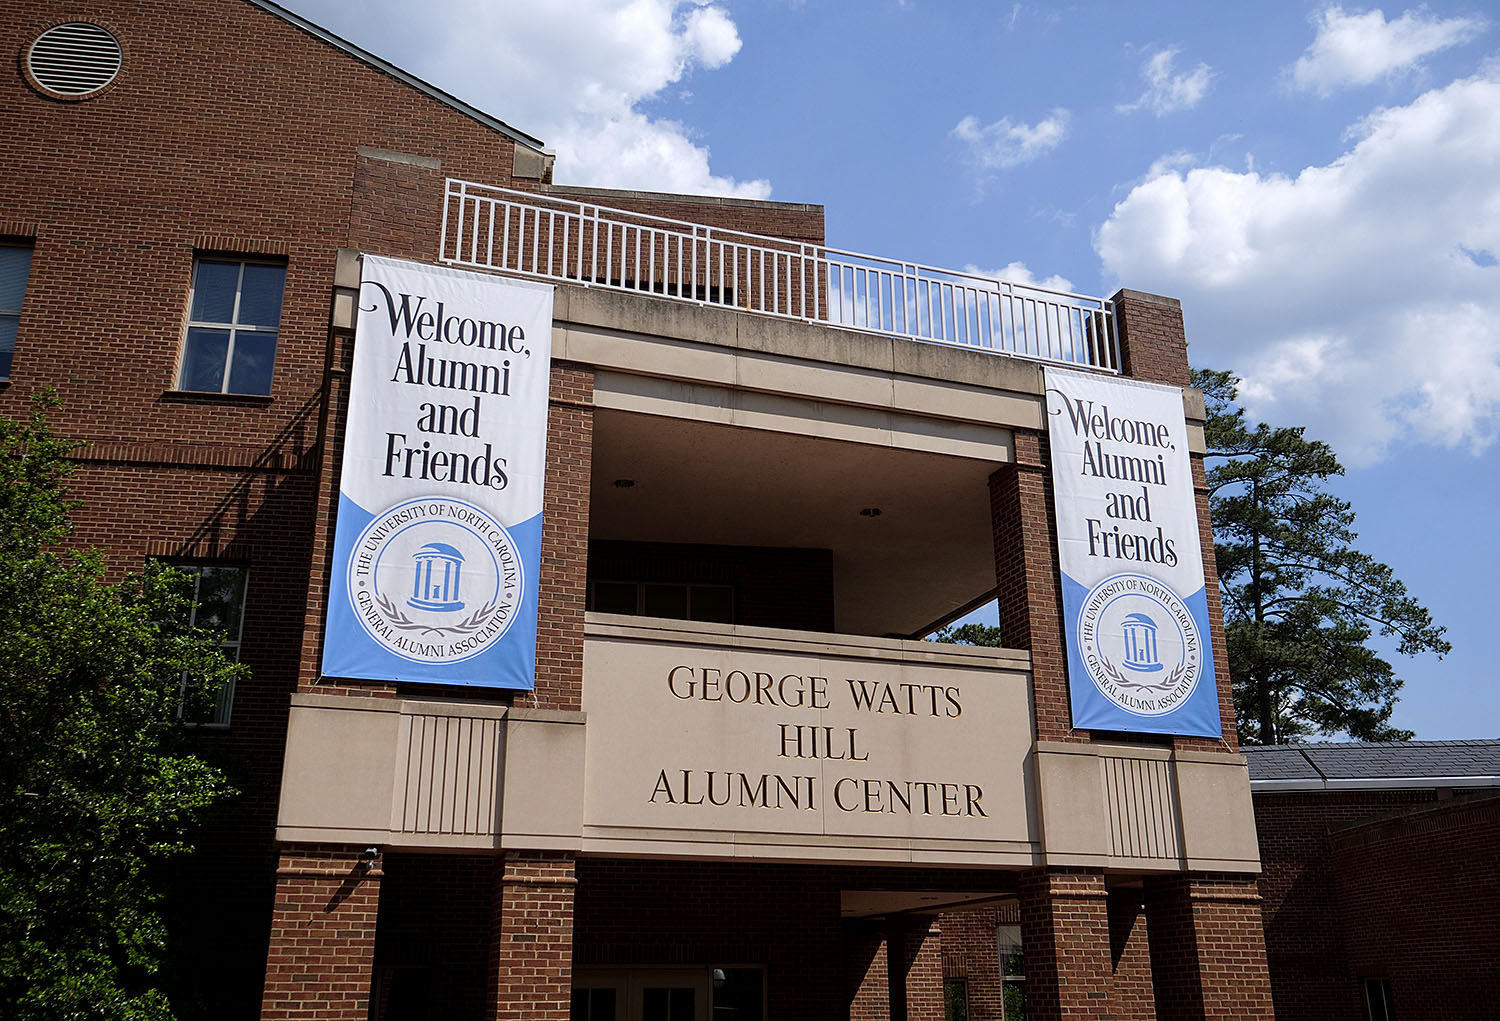 George Watts Hill Alumni Center